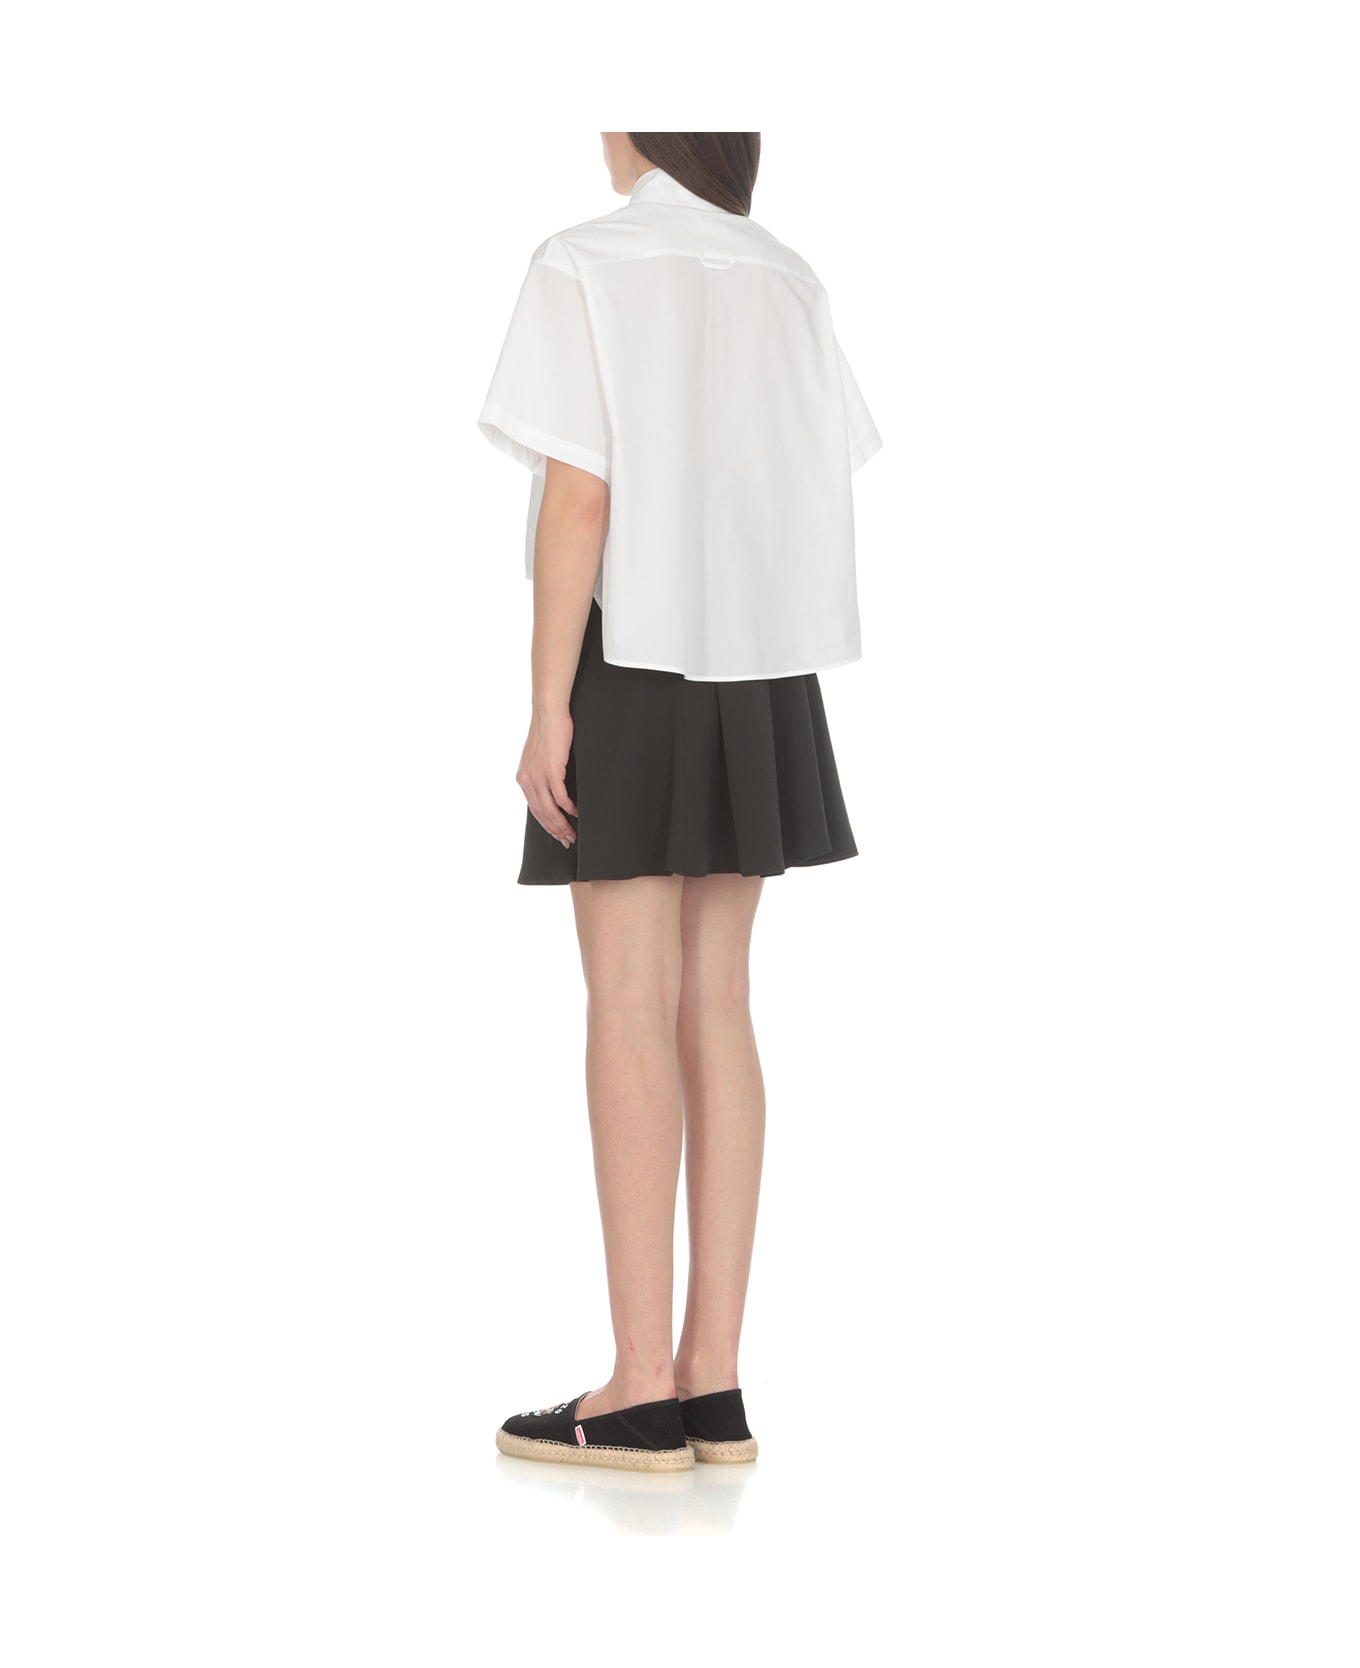 Kenzo Boke 2.0 Cropped Shirt - White